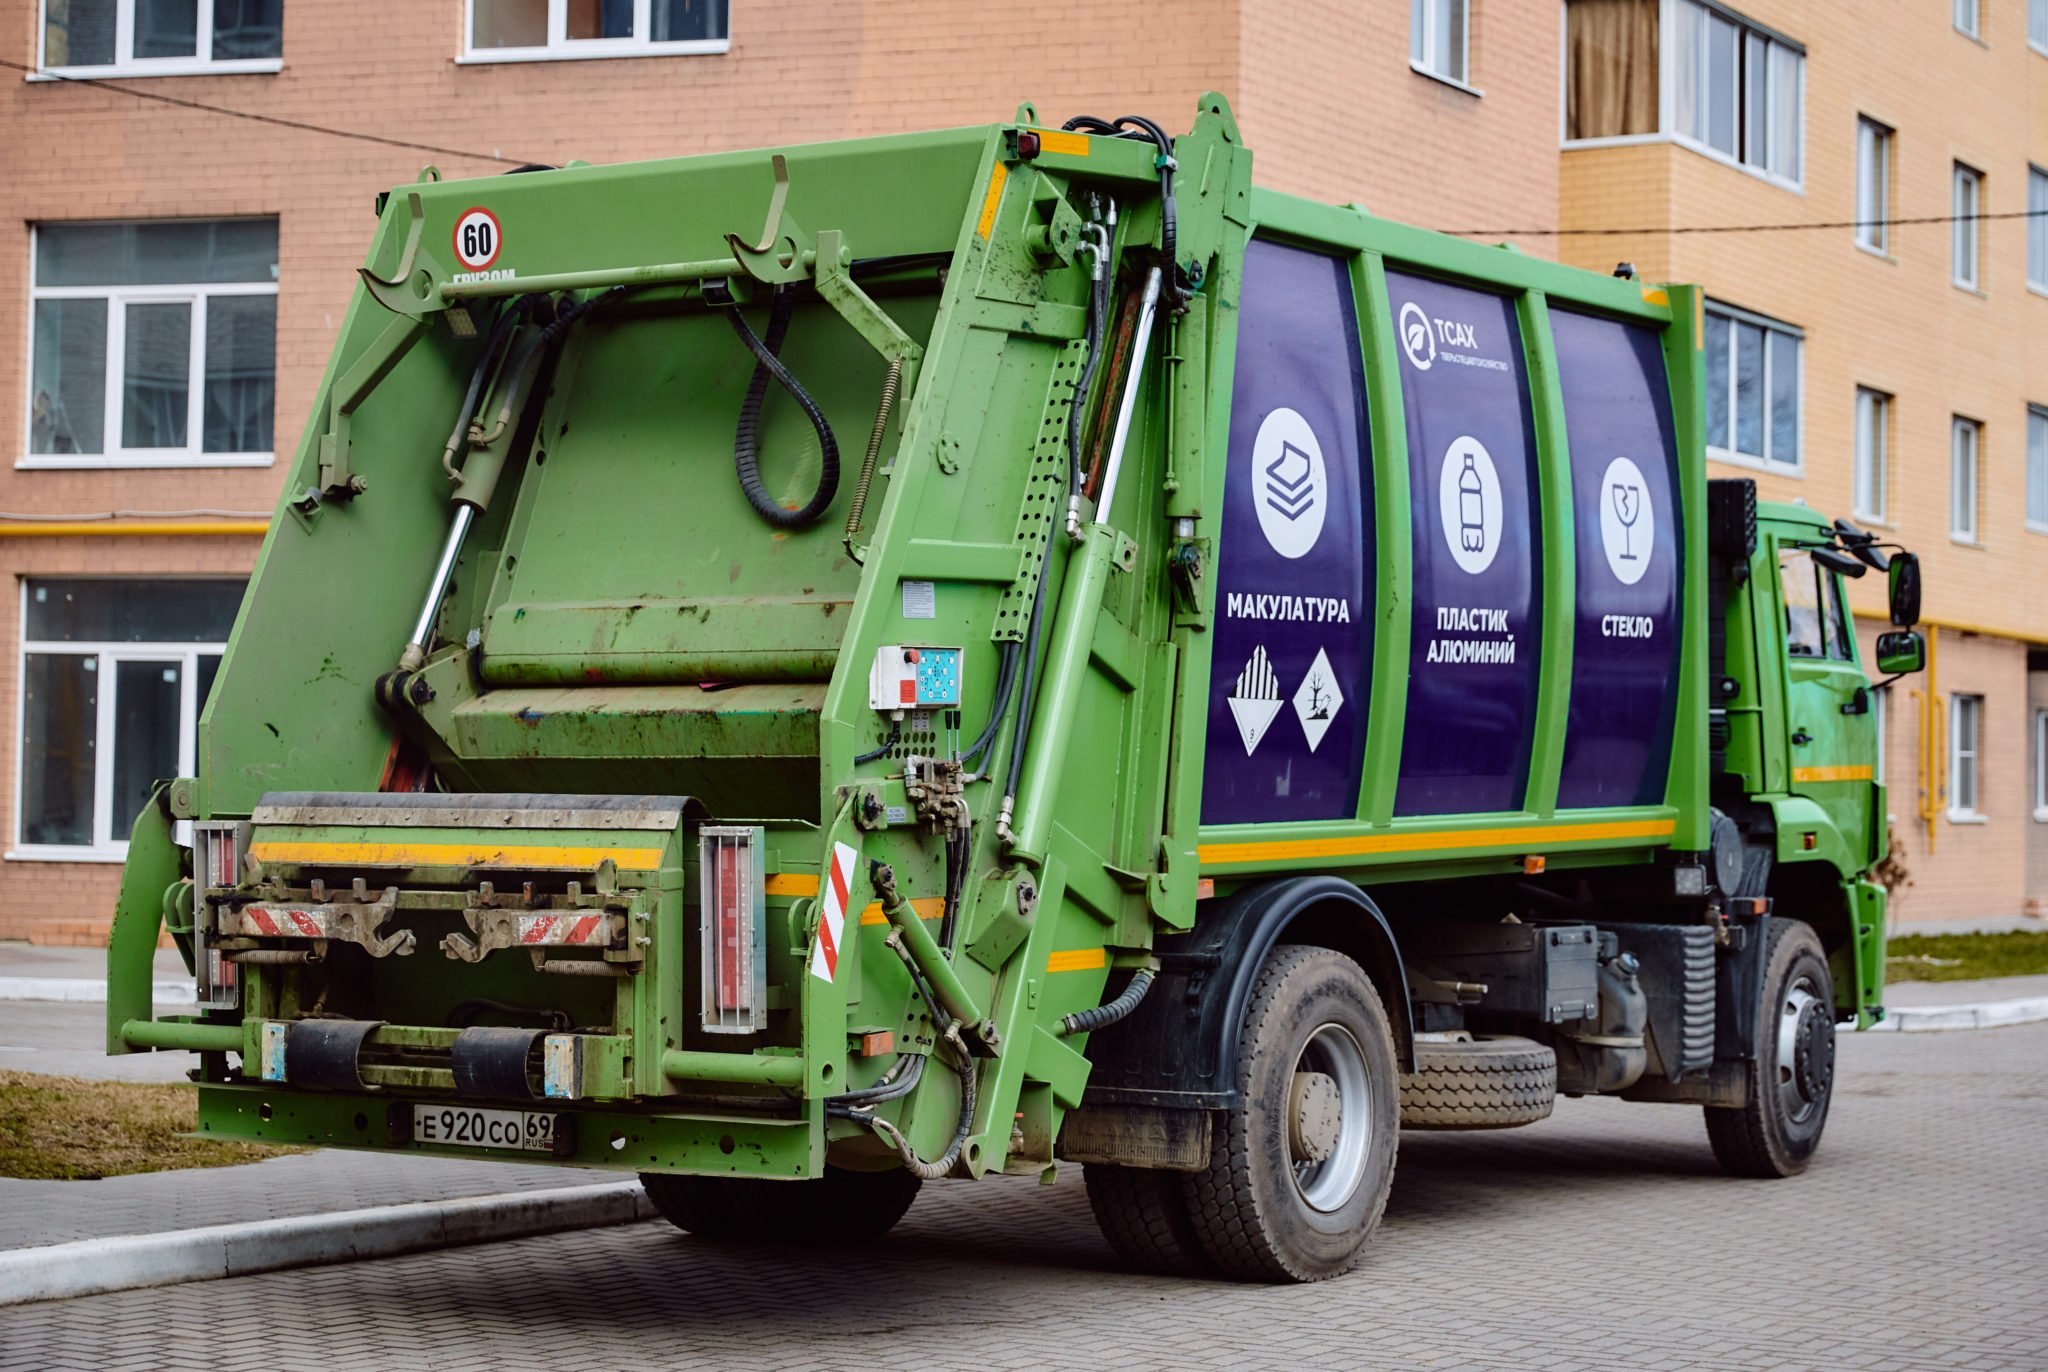 Мусоровоз зеленый. КАМАЗ 6520 мусоровоз Меркатор. КАМАЗ к5 мусоровоз. МВ-10 мусоровоз. Мусоровоз КАМАЗ зеленый.